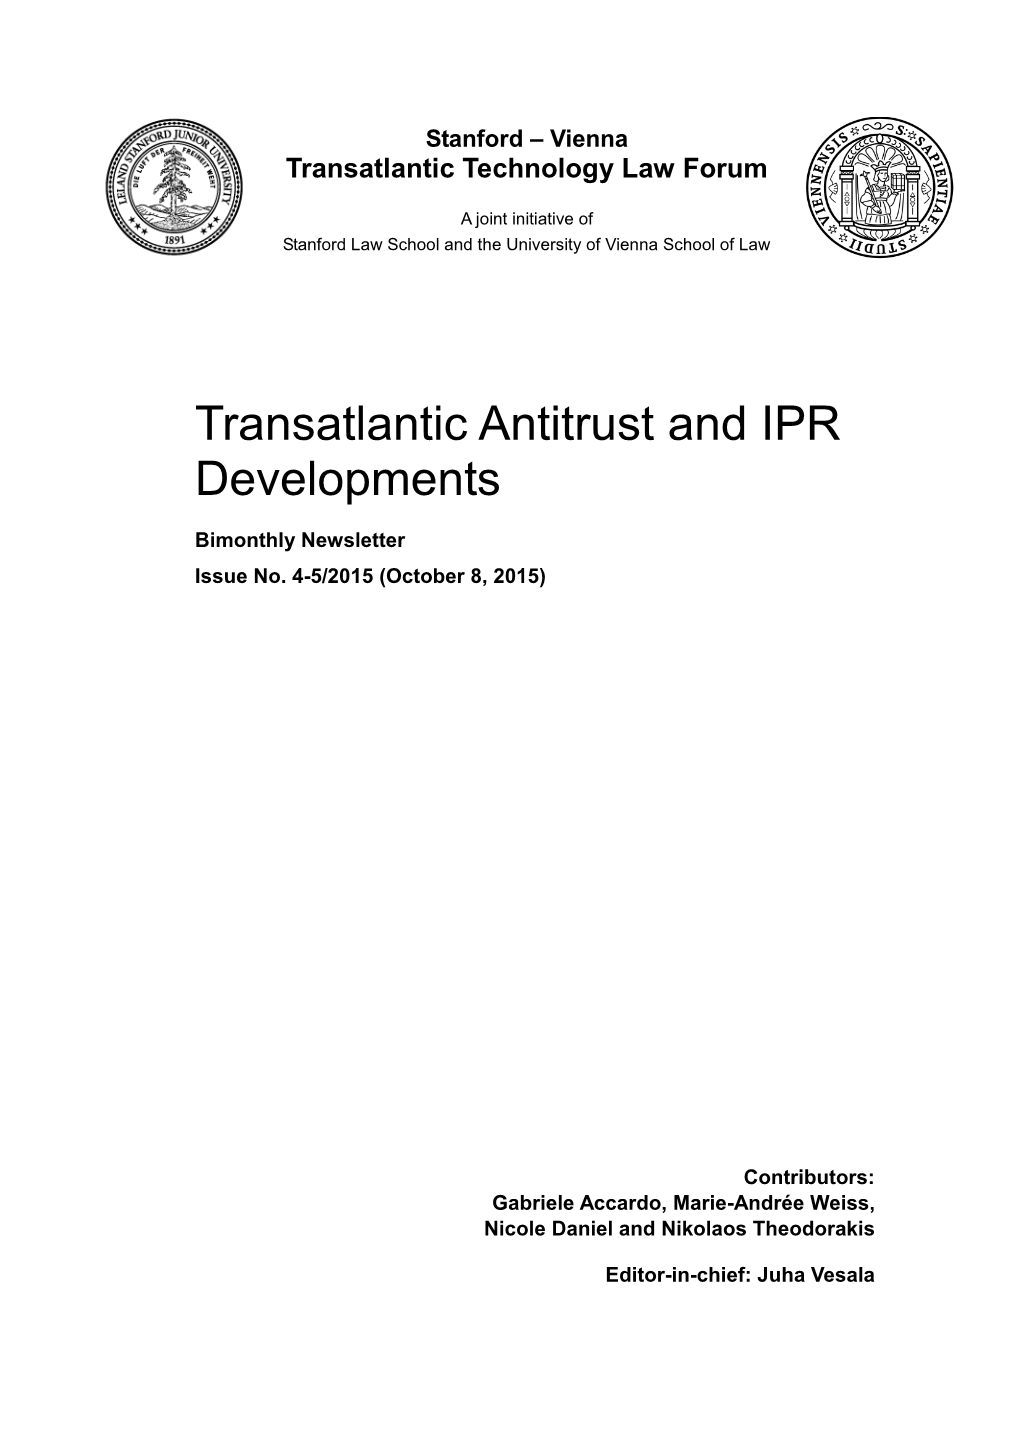 Transatlantic Antitrust and IPR Developments, Issue 4-5/2015 Stanford-Vienna Transatlantic Technology Law Forum 3